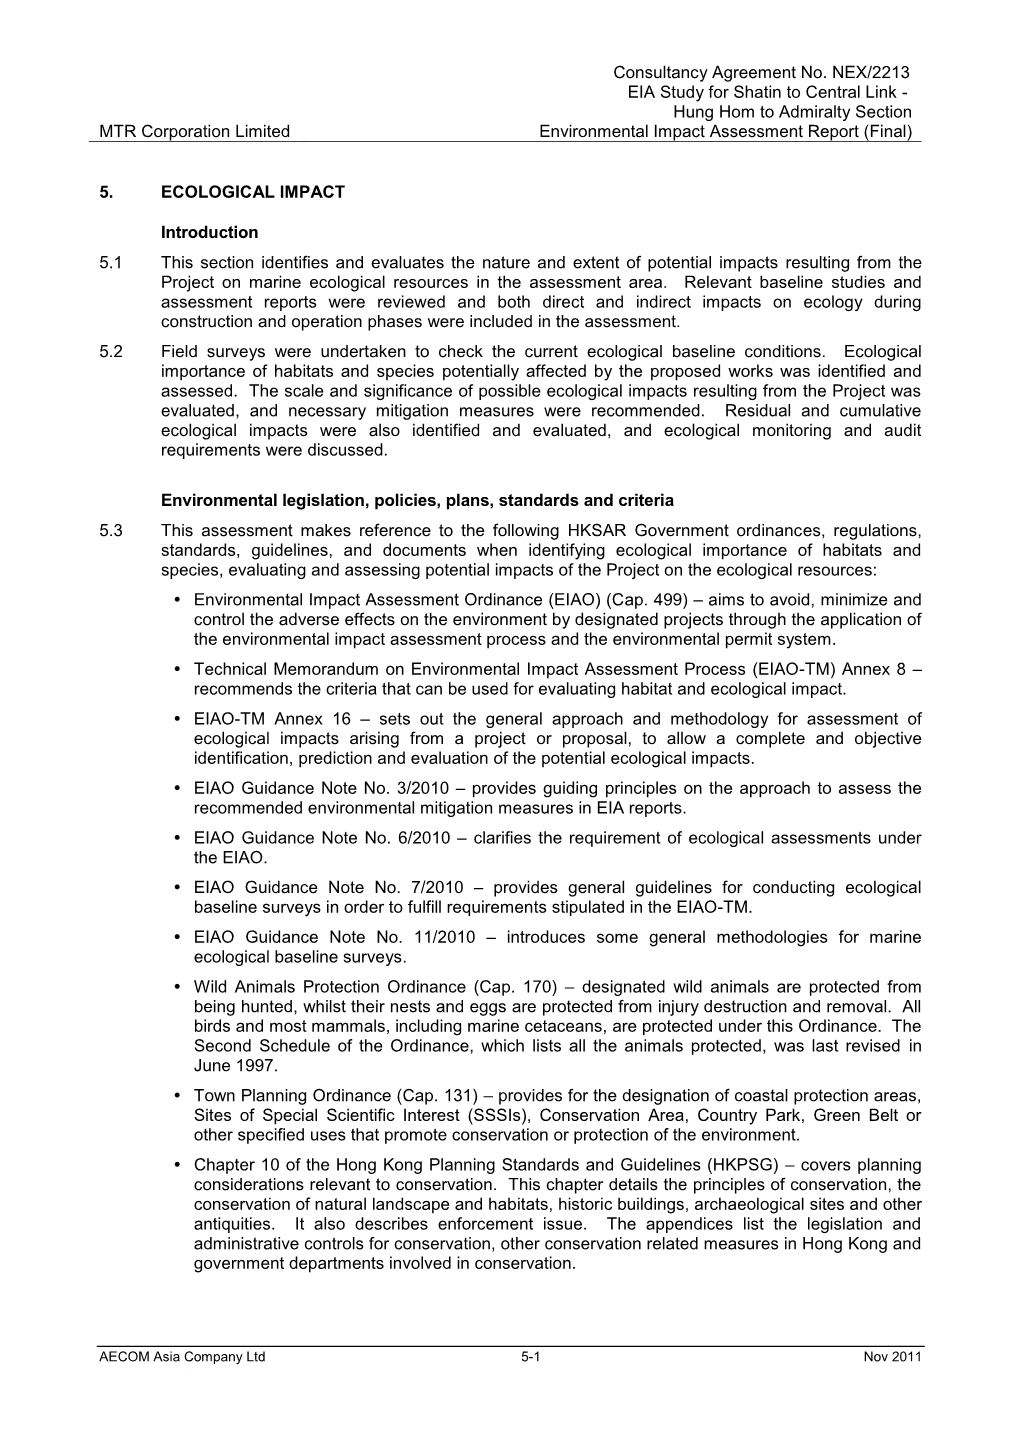 Consultancy Agreement No. NEX/2213 MTR Corporation